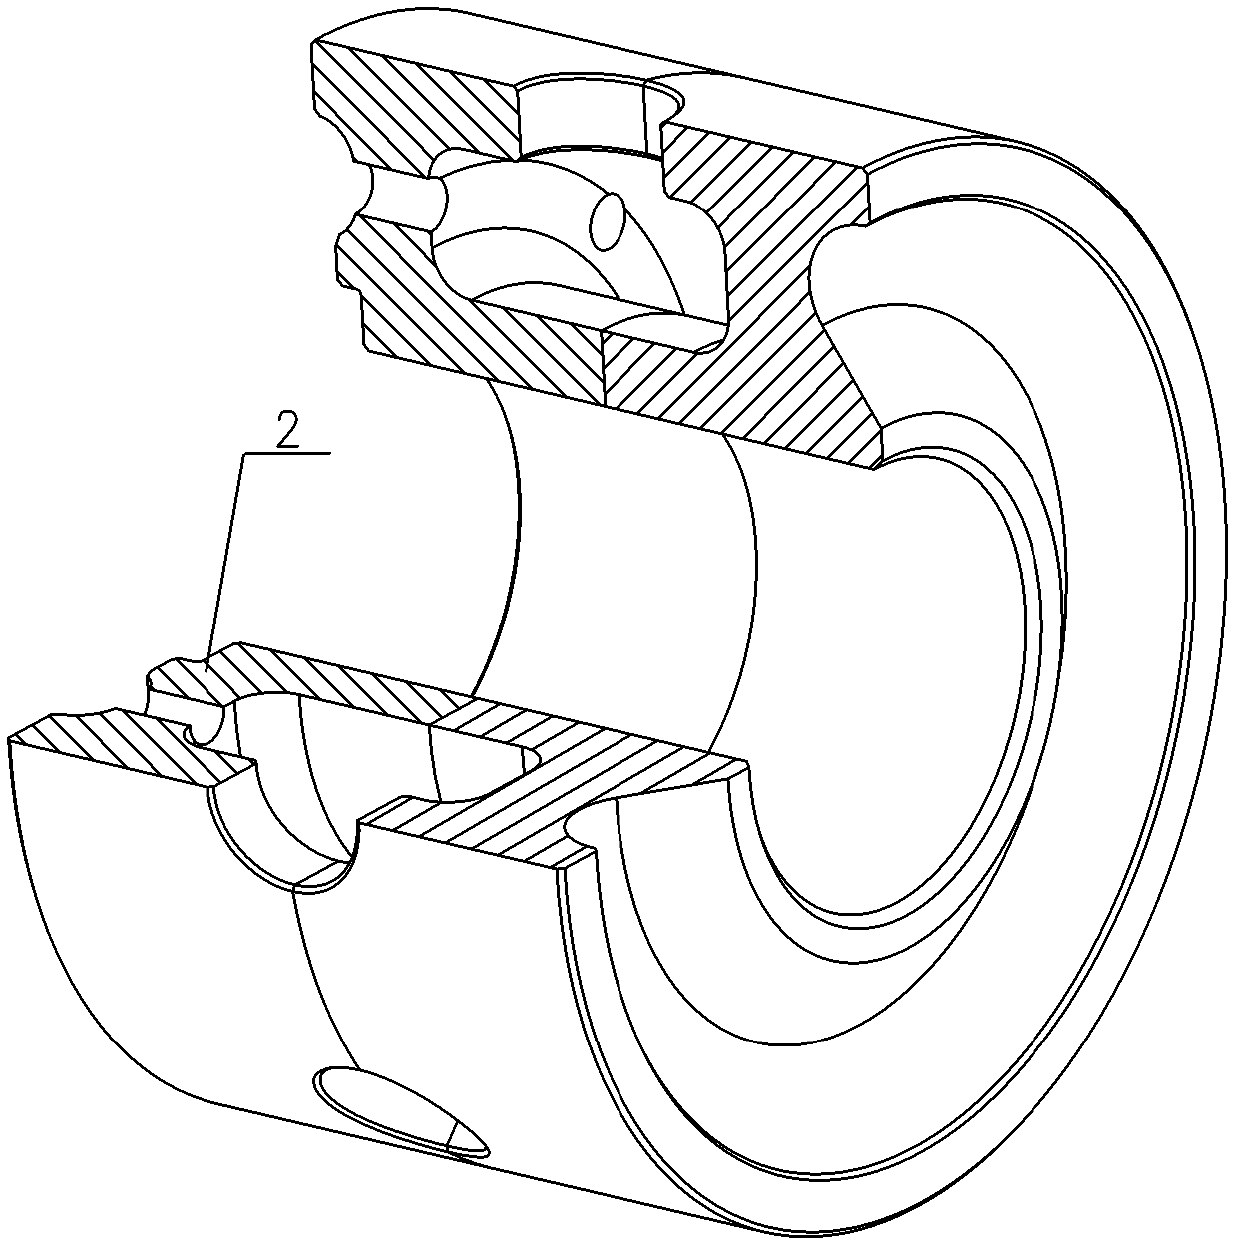 Method for optimally designing structure of sliding shaft sleeve based on Kriging model